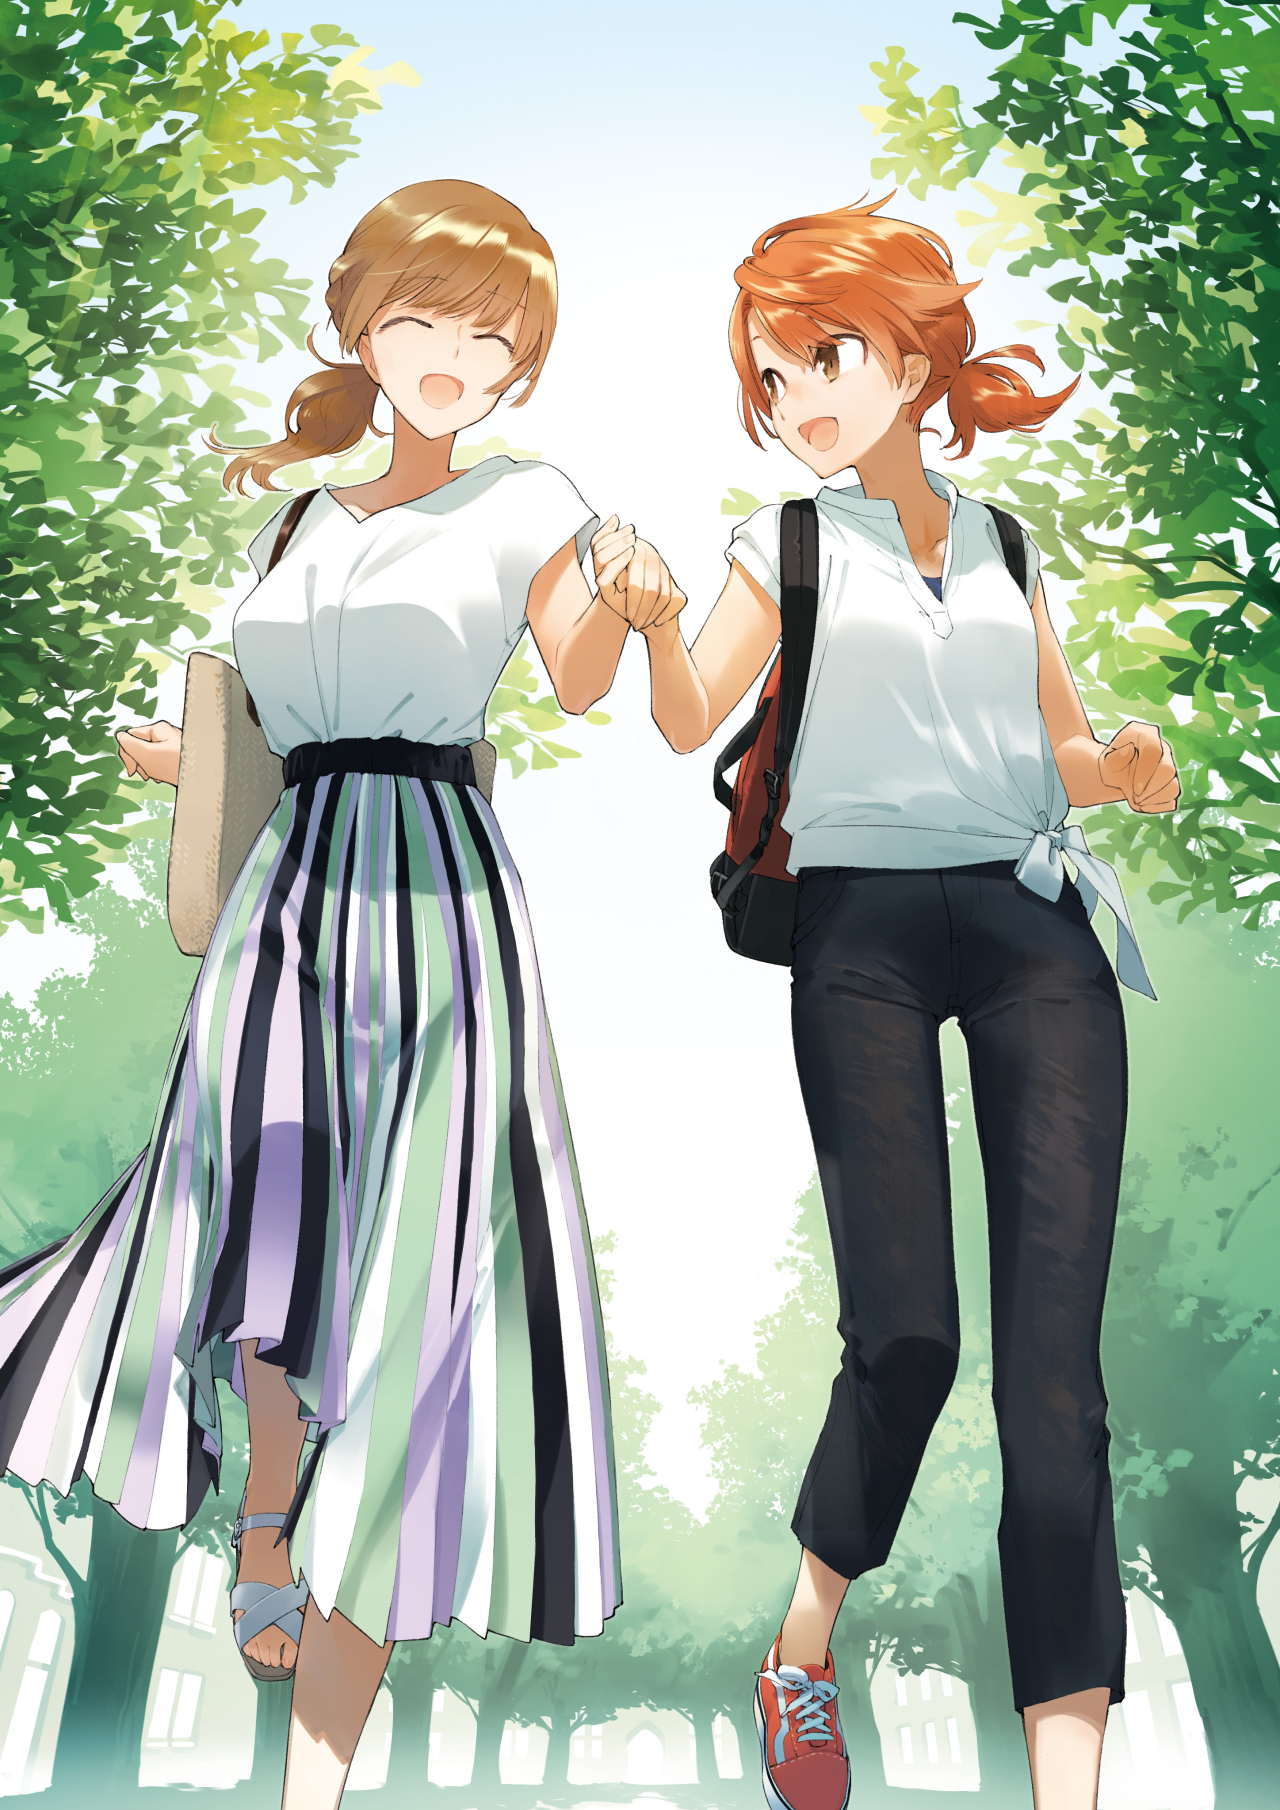 ParadiseYuri — Hit Lesbian Anime and Manga Series 'Bloom Into...